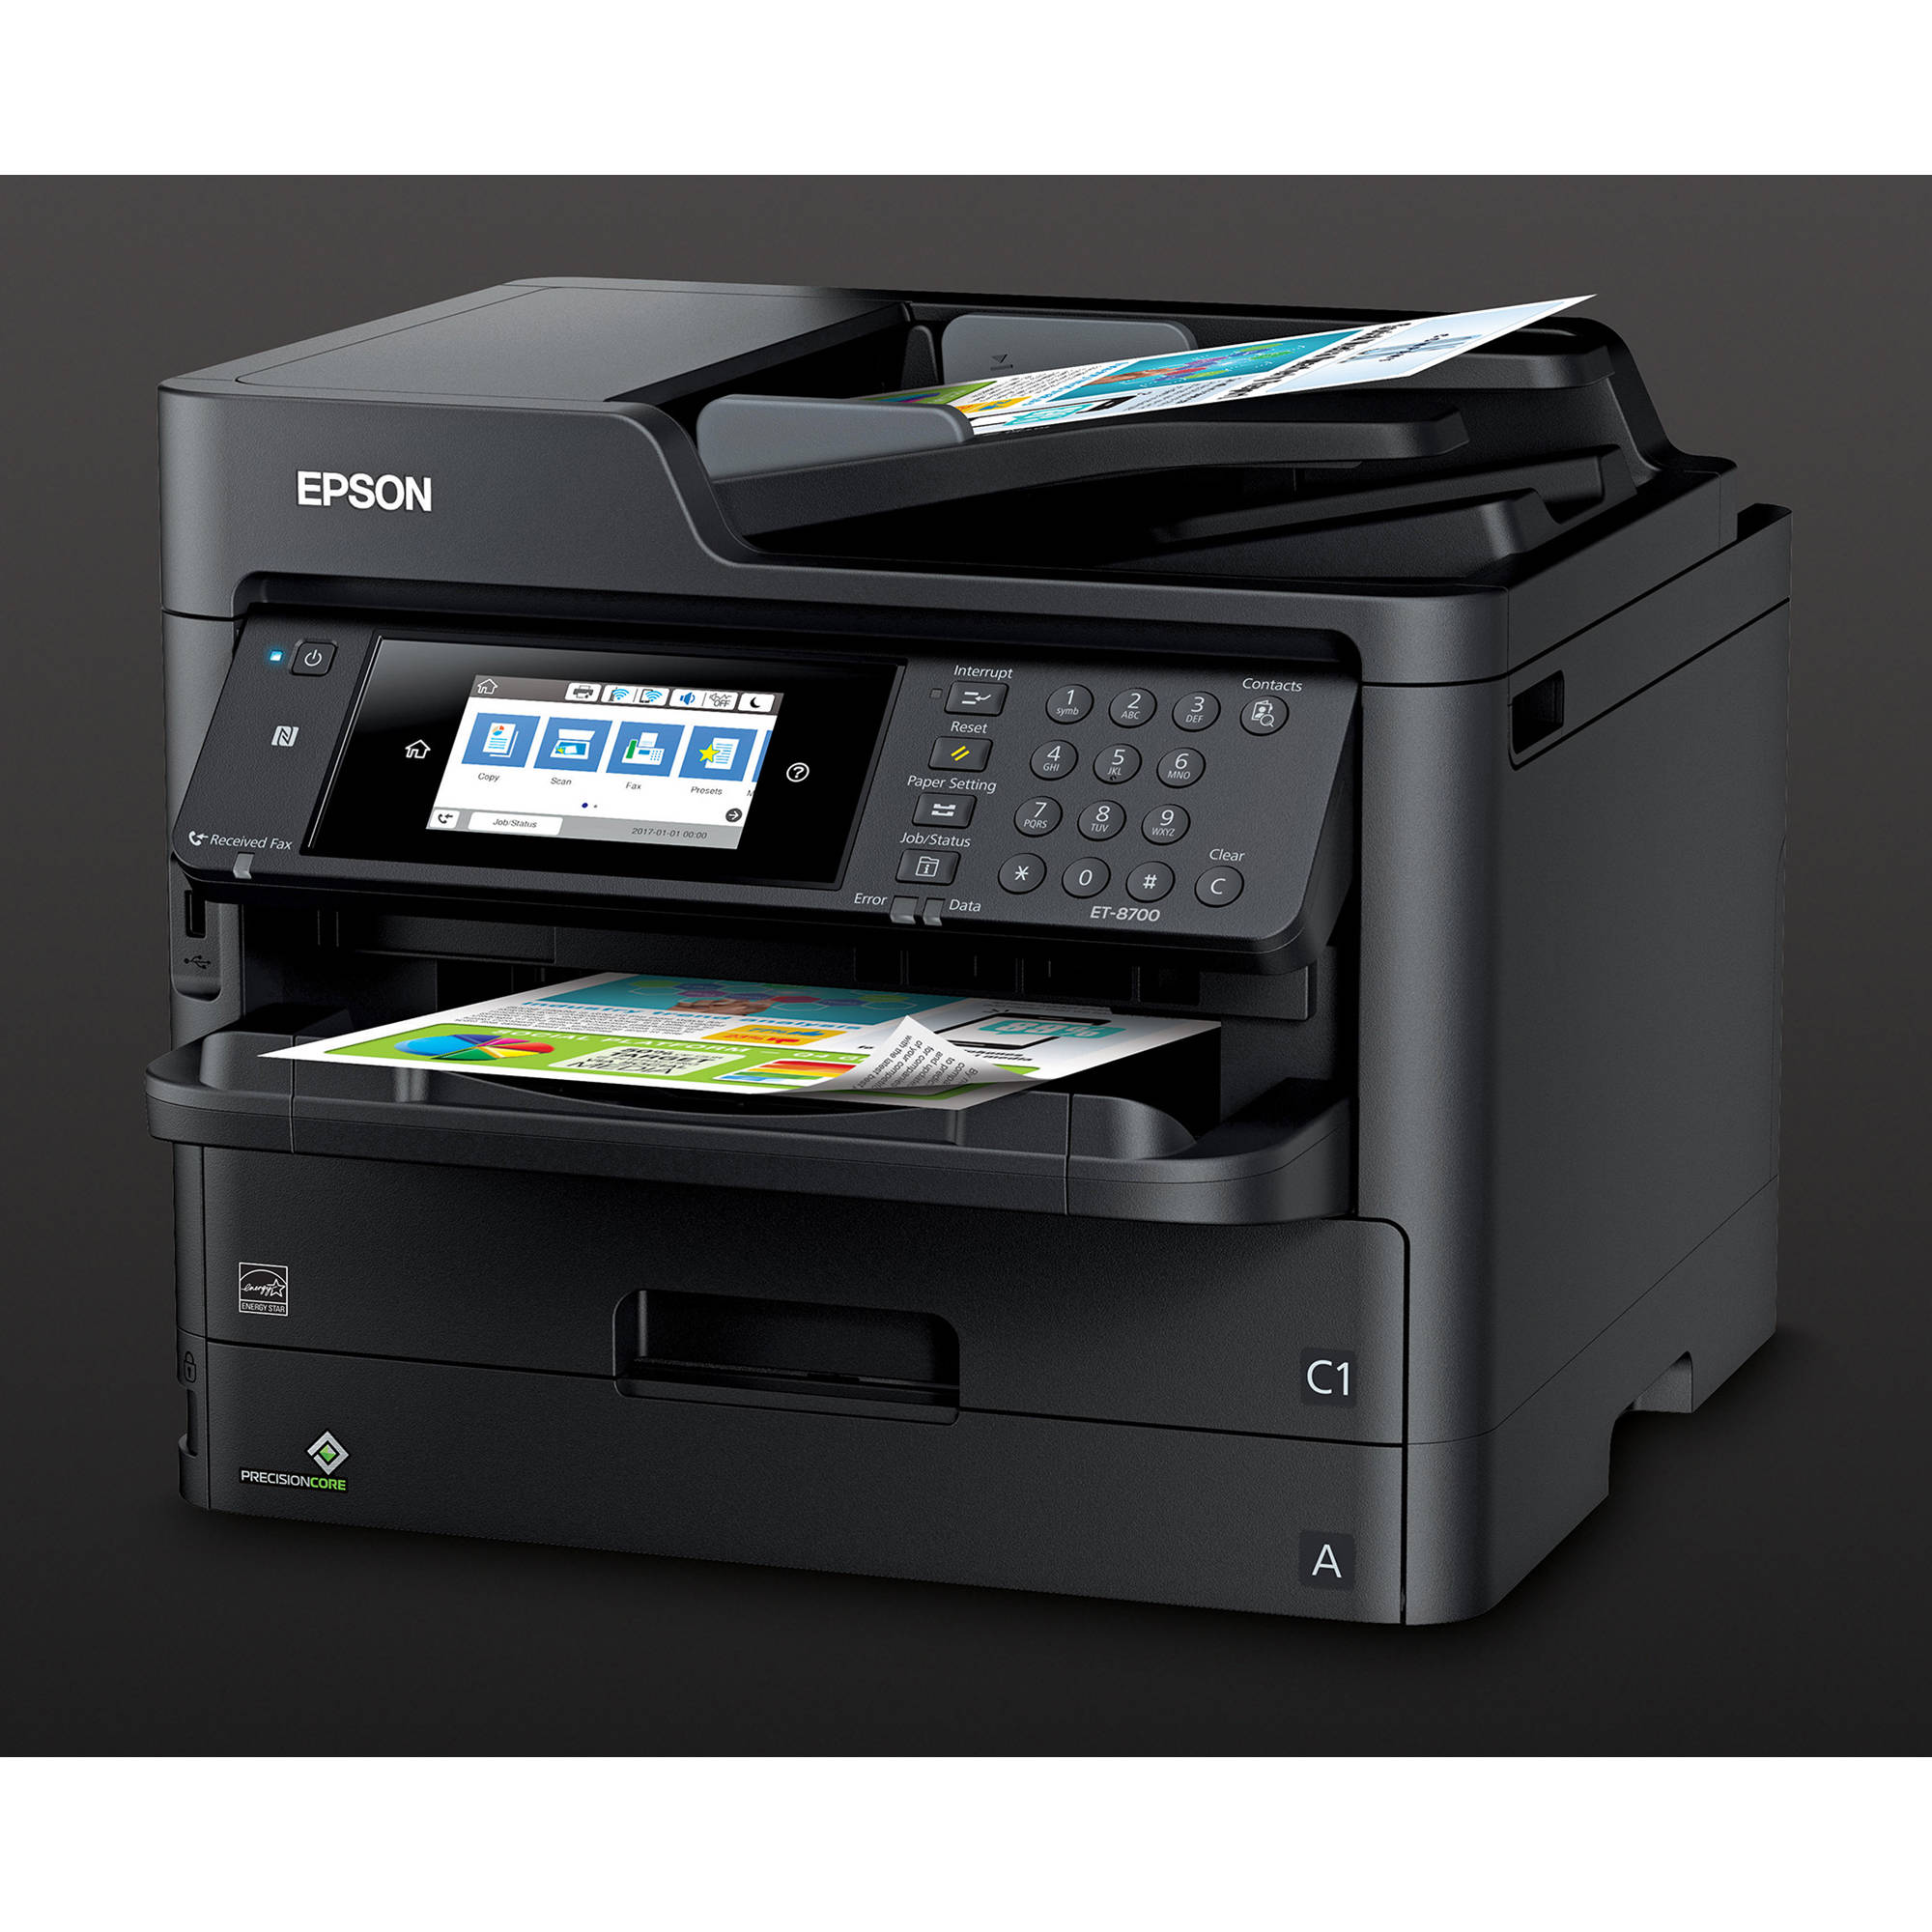 Epson Et 8700 Printer Driver - Printer Review Epson Workforce Pro Et 8700 Vcloudinfo - How to ...